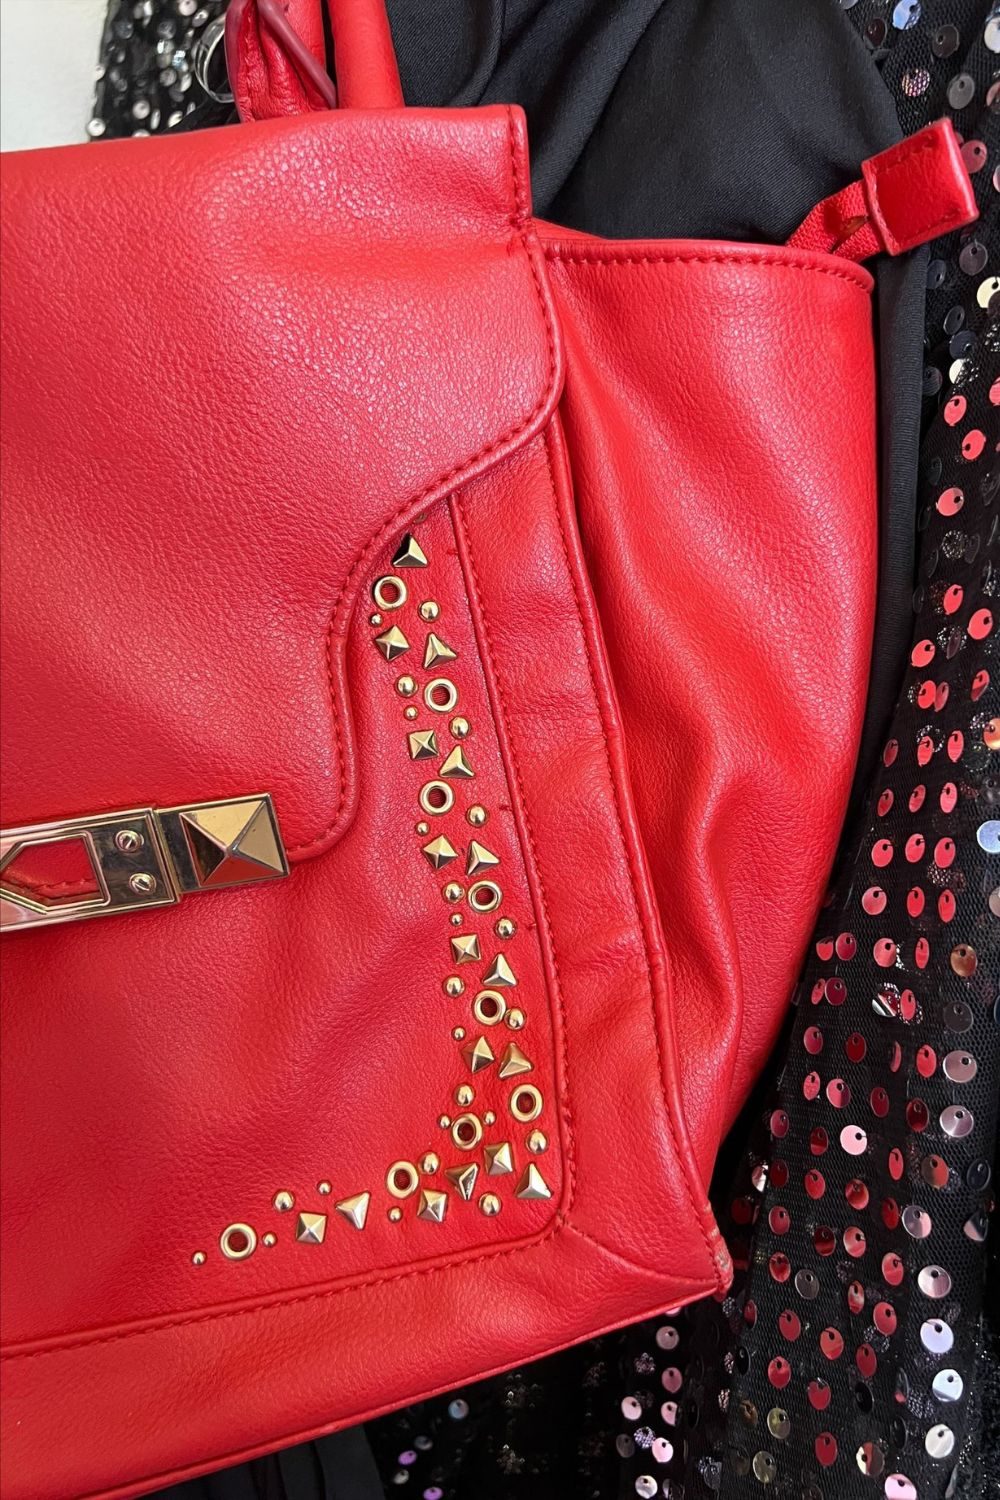 Kim Kardashian Kollection Long Rivet Plaid Helium Wallet For Women Stylish  Clutch Bag By Carteira Feminina227V From Gtr254, $20.49 | DHgate.Com